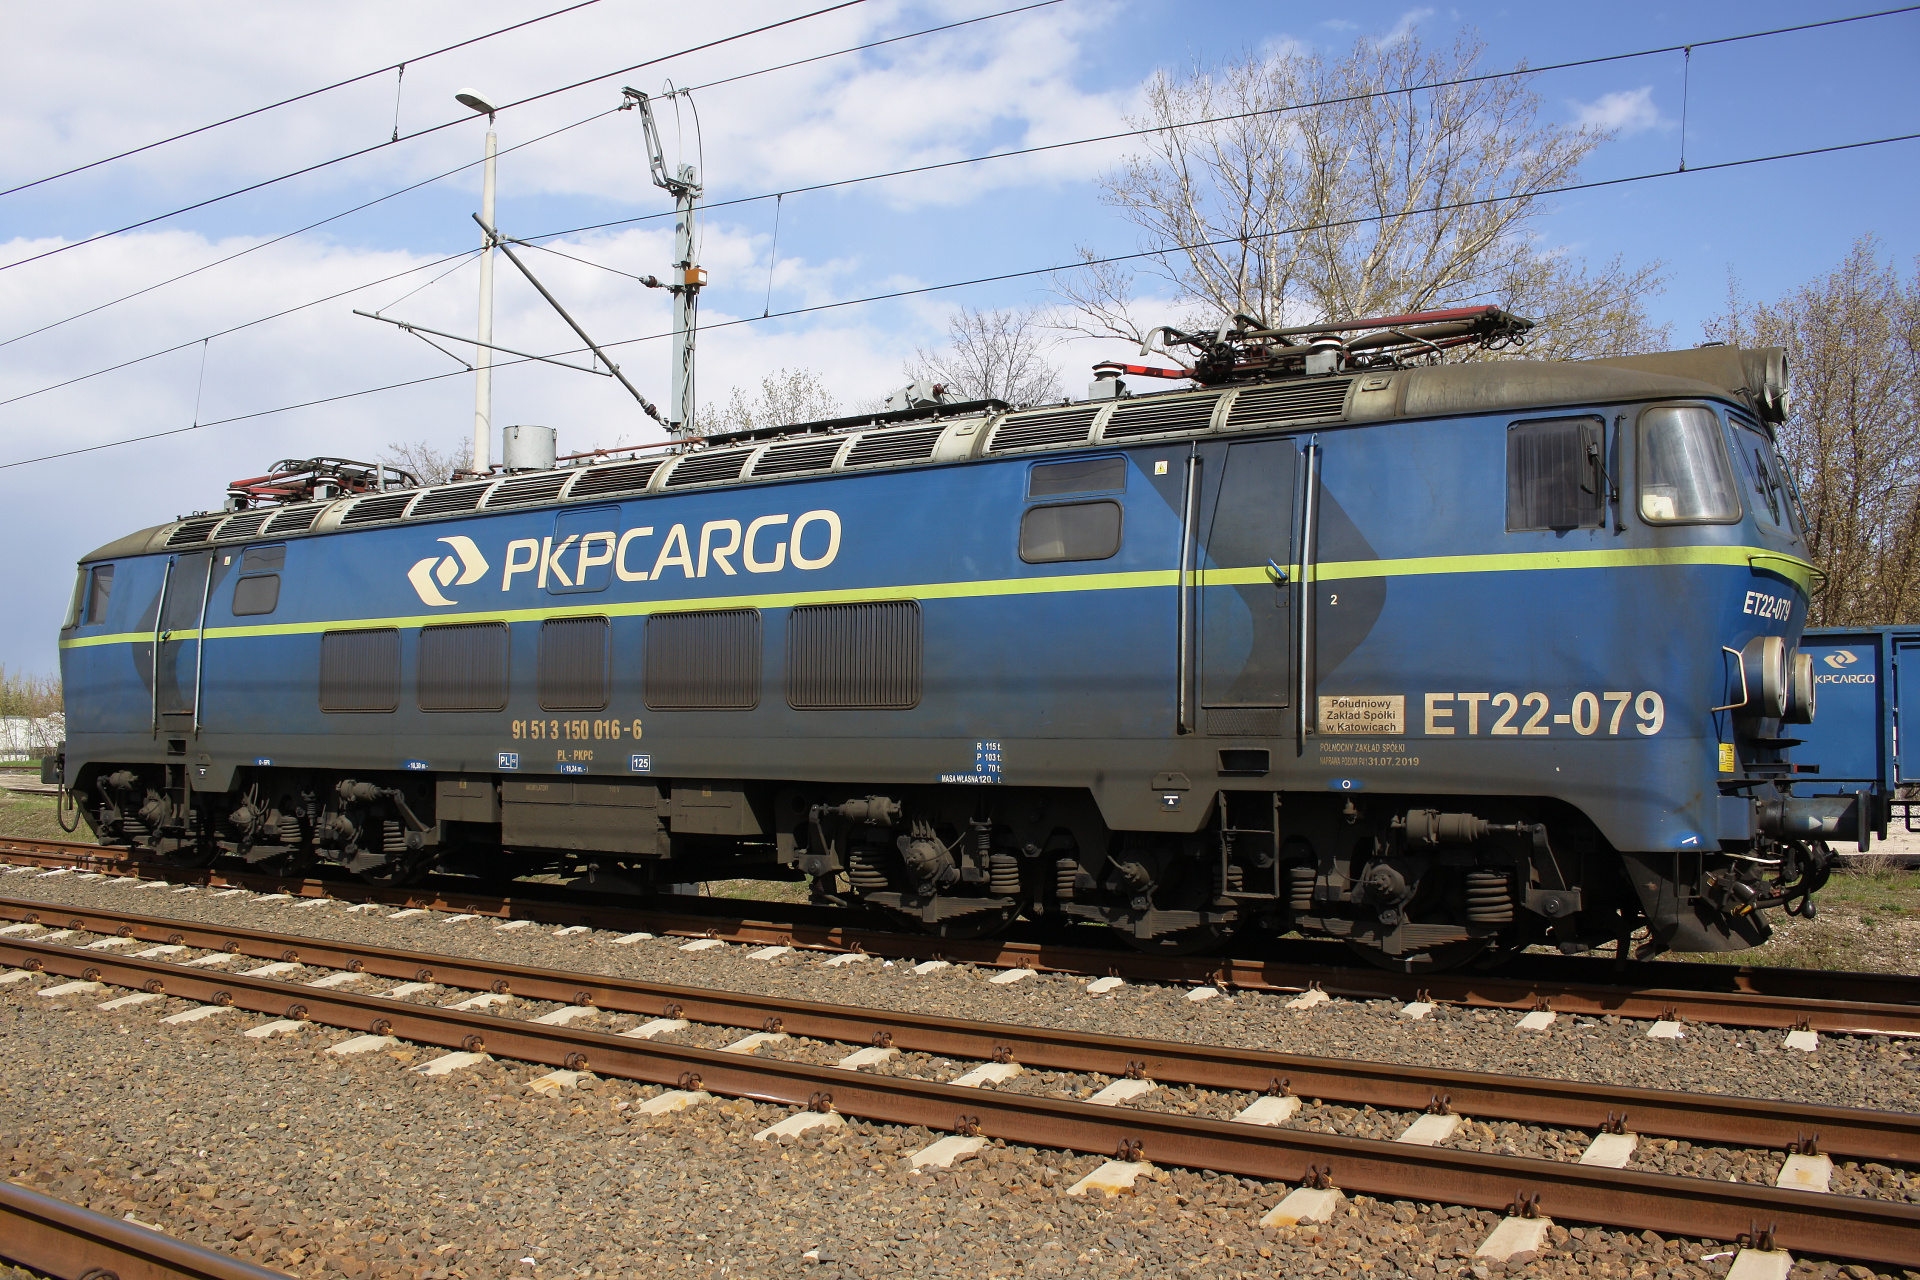 ET22-079 (Vehicles » Trains and Locomotives » Pafawag 201E)